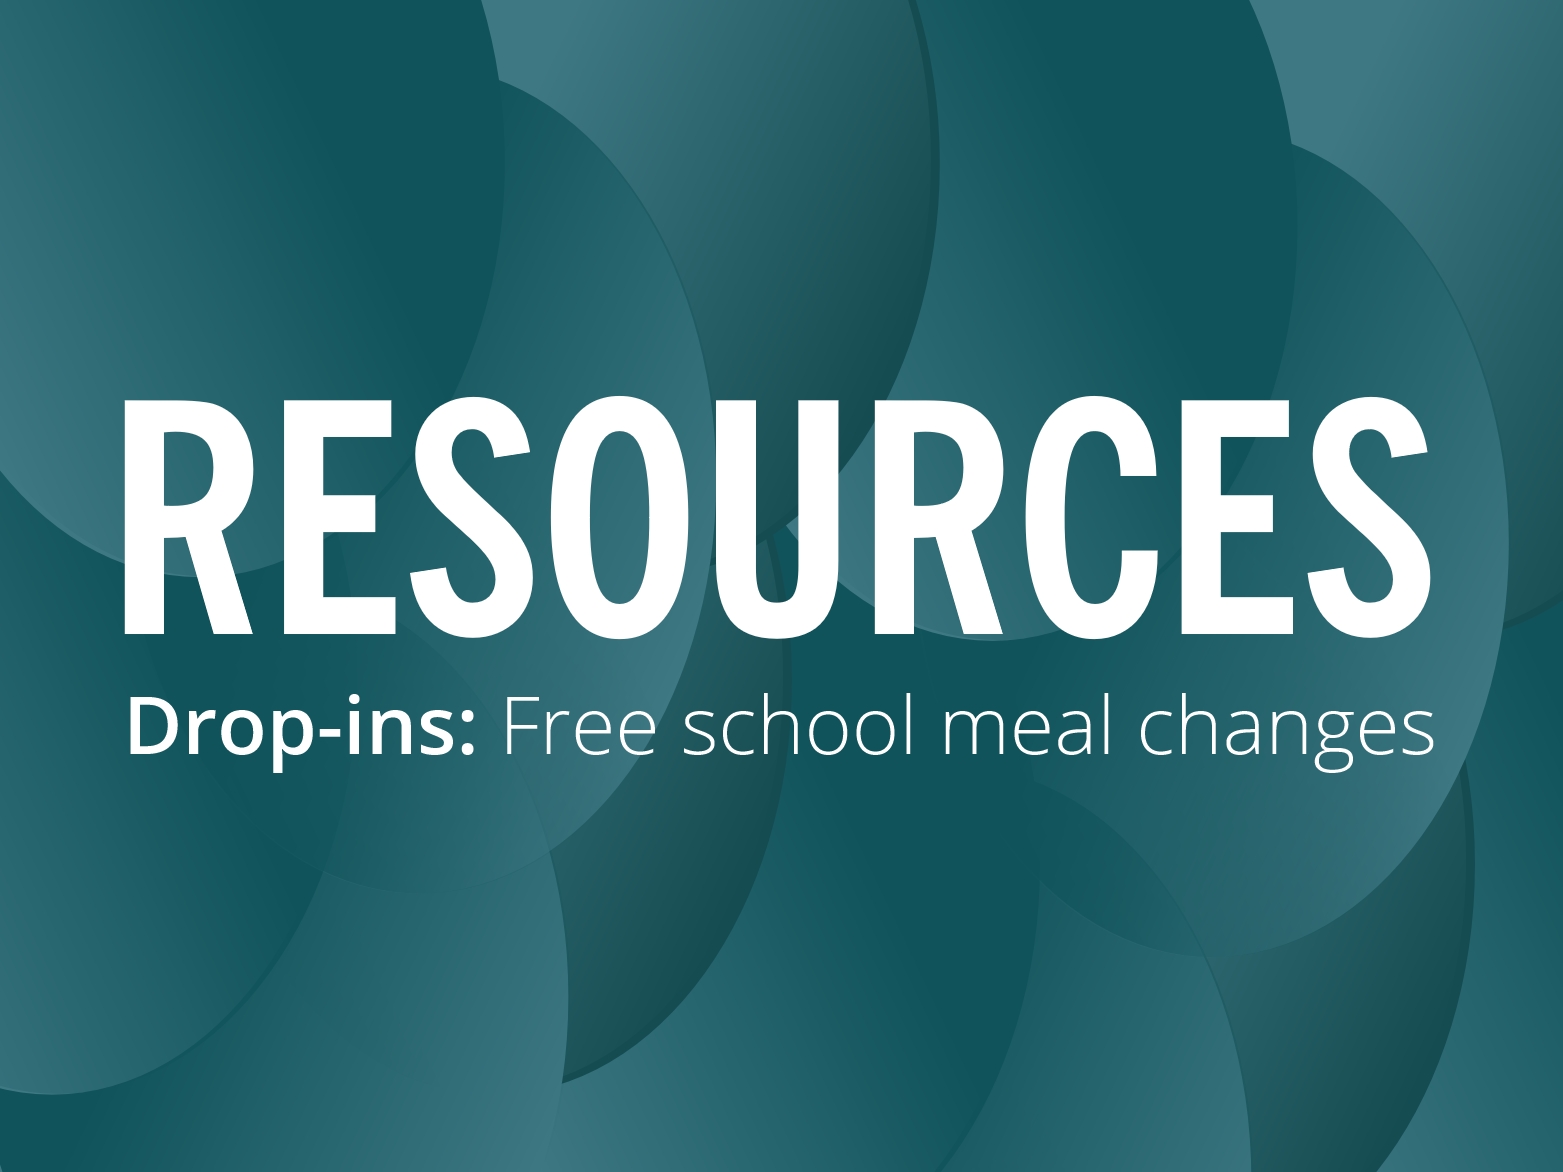 RESOURCES: School meal cuts drop-ins